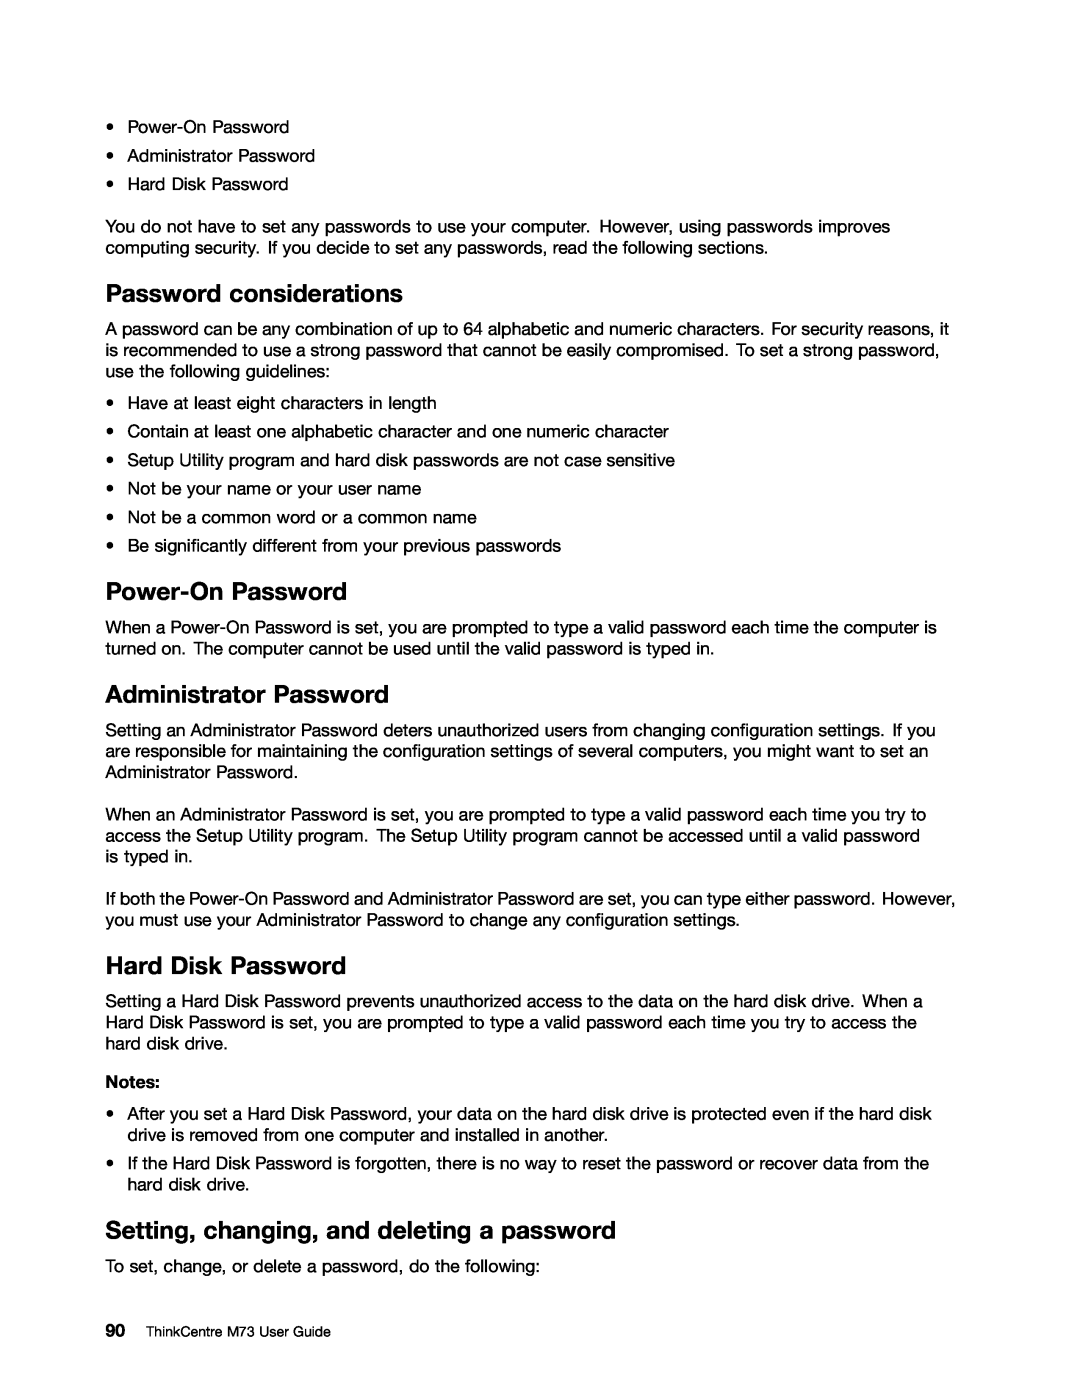 Lenovo M73 manual Password considerations, Power-On Password, Administrator Password, Hard Disk Password 